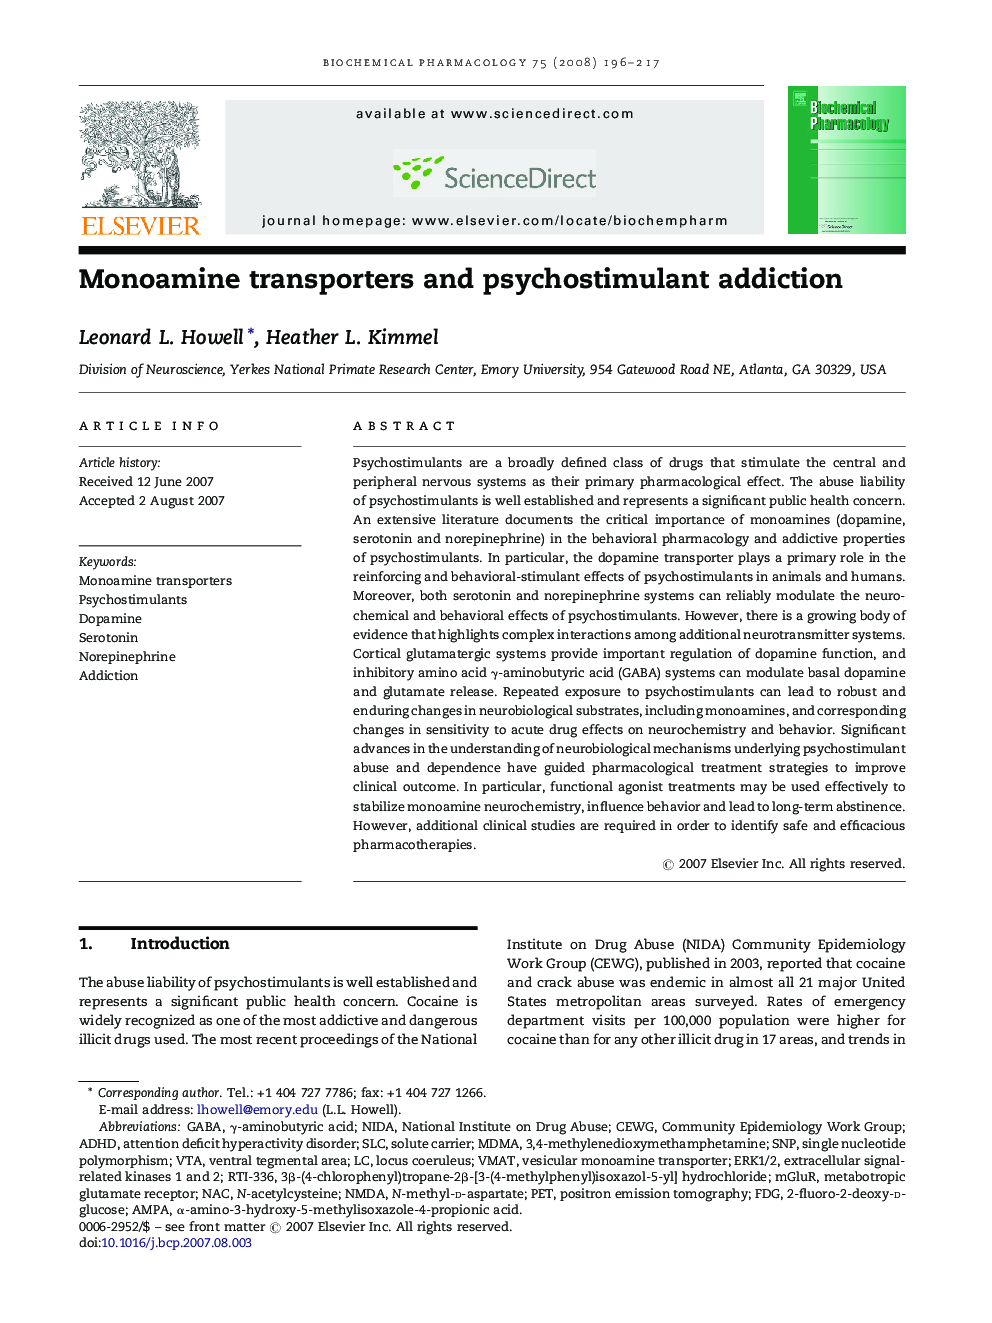 Monoamine transporters and psychostimulant addiction